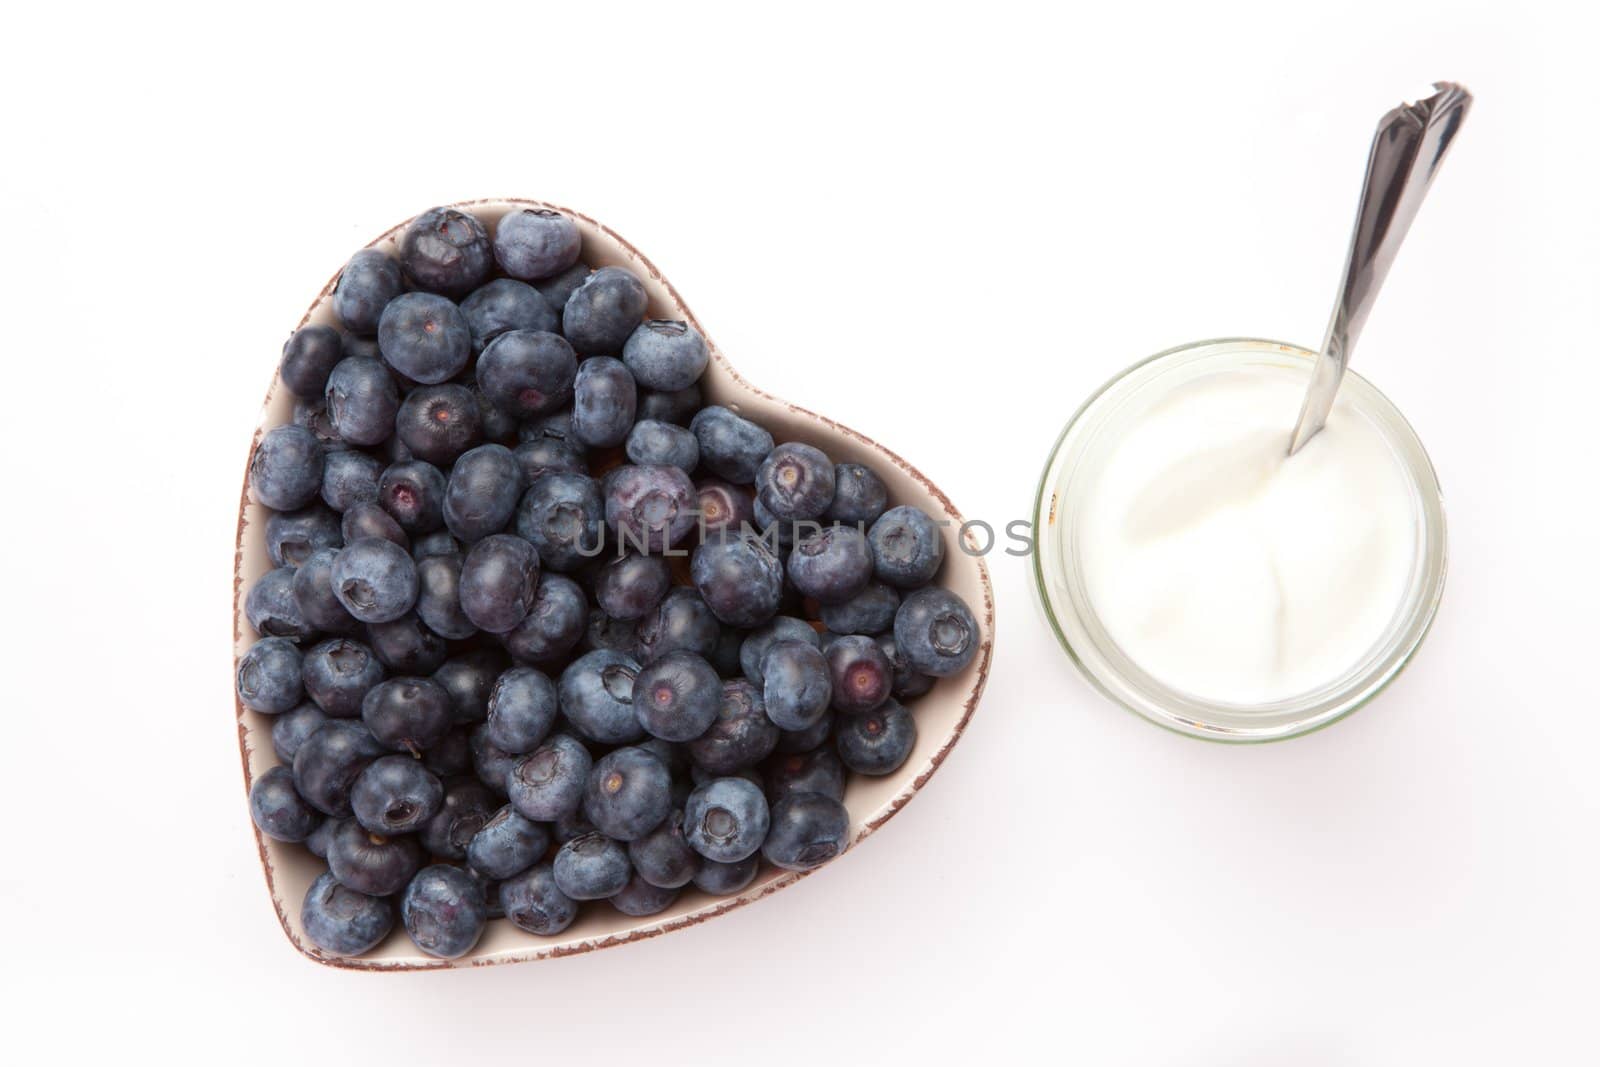 White yogurt and blueberries in a heart shaped bowl  by Wavebreakmedia